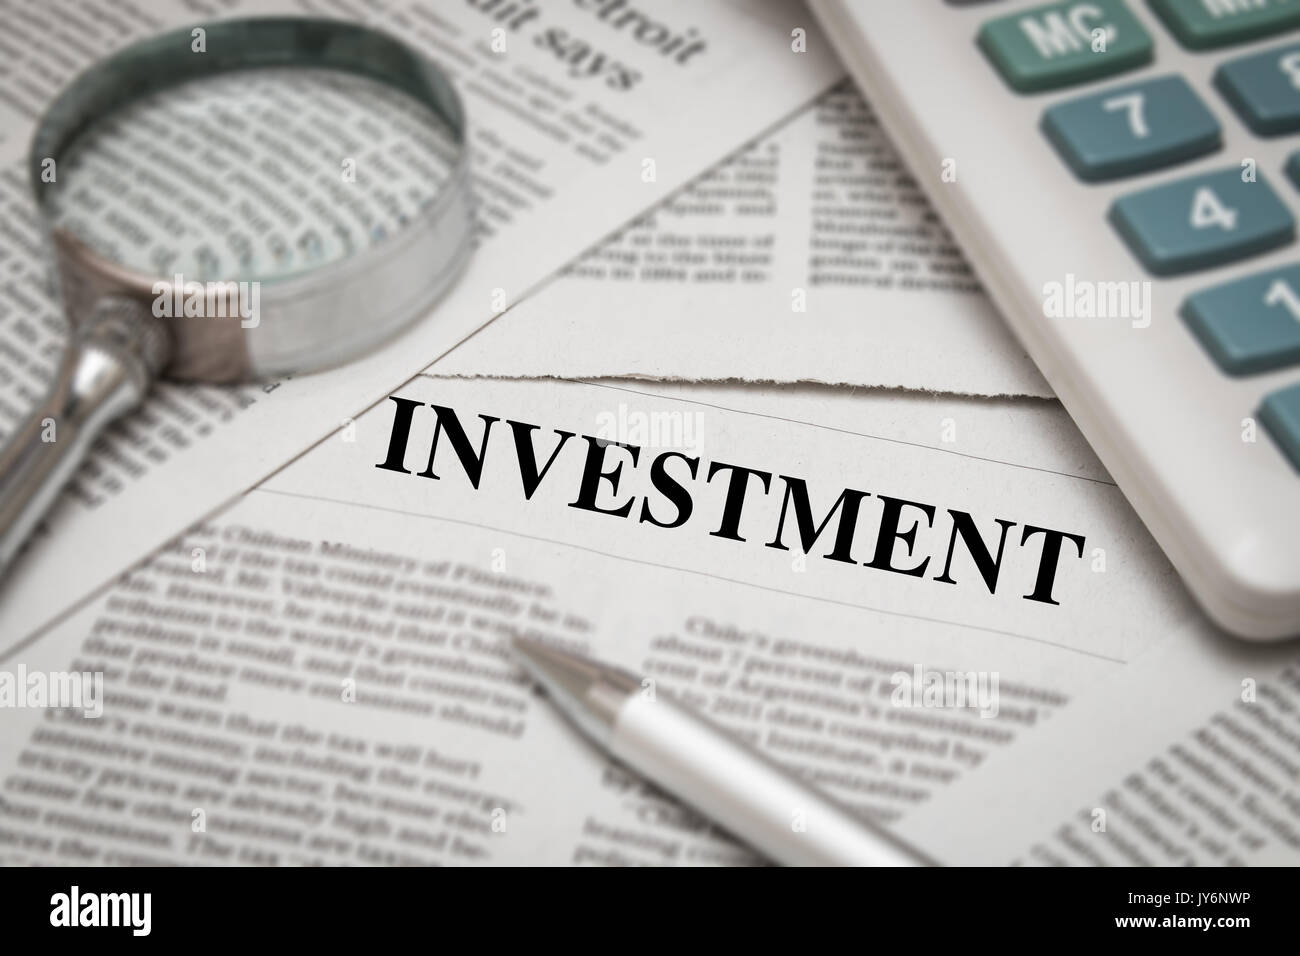 investment headline on newspaper media Stock Photo